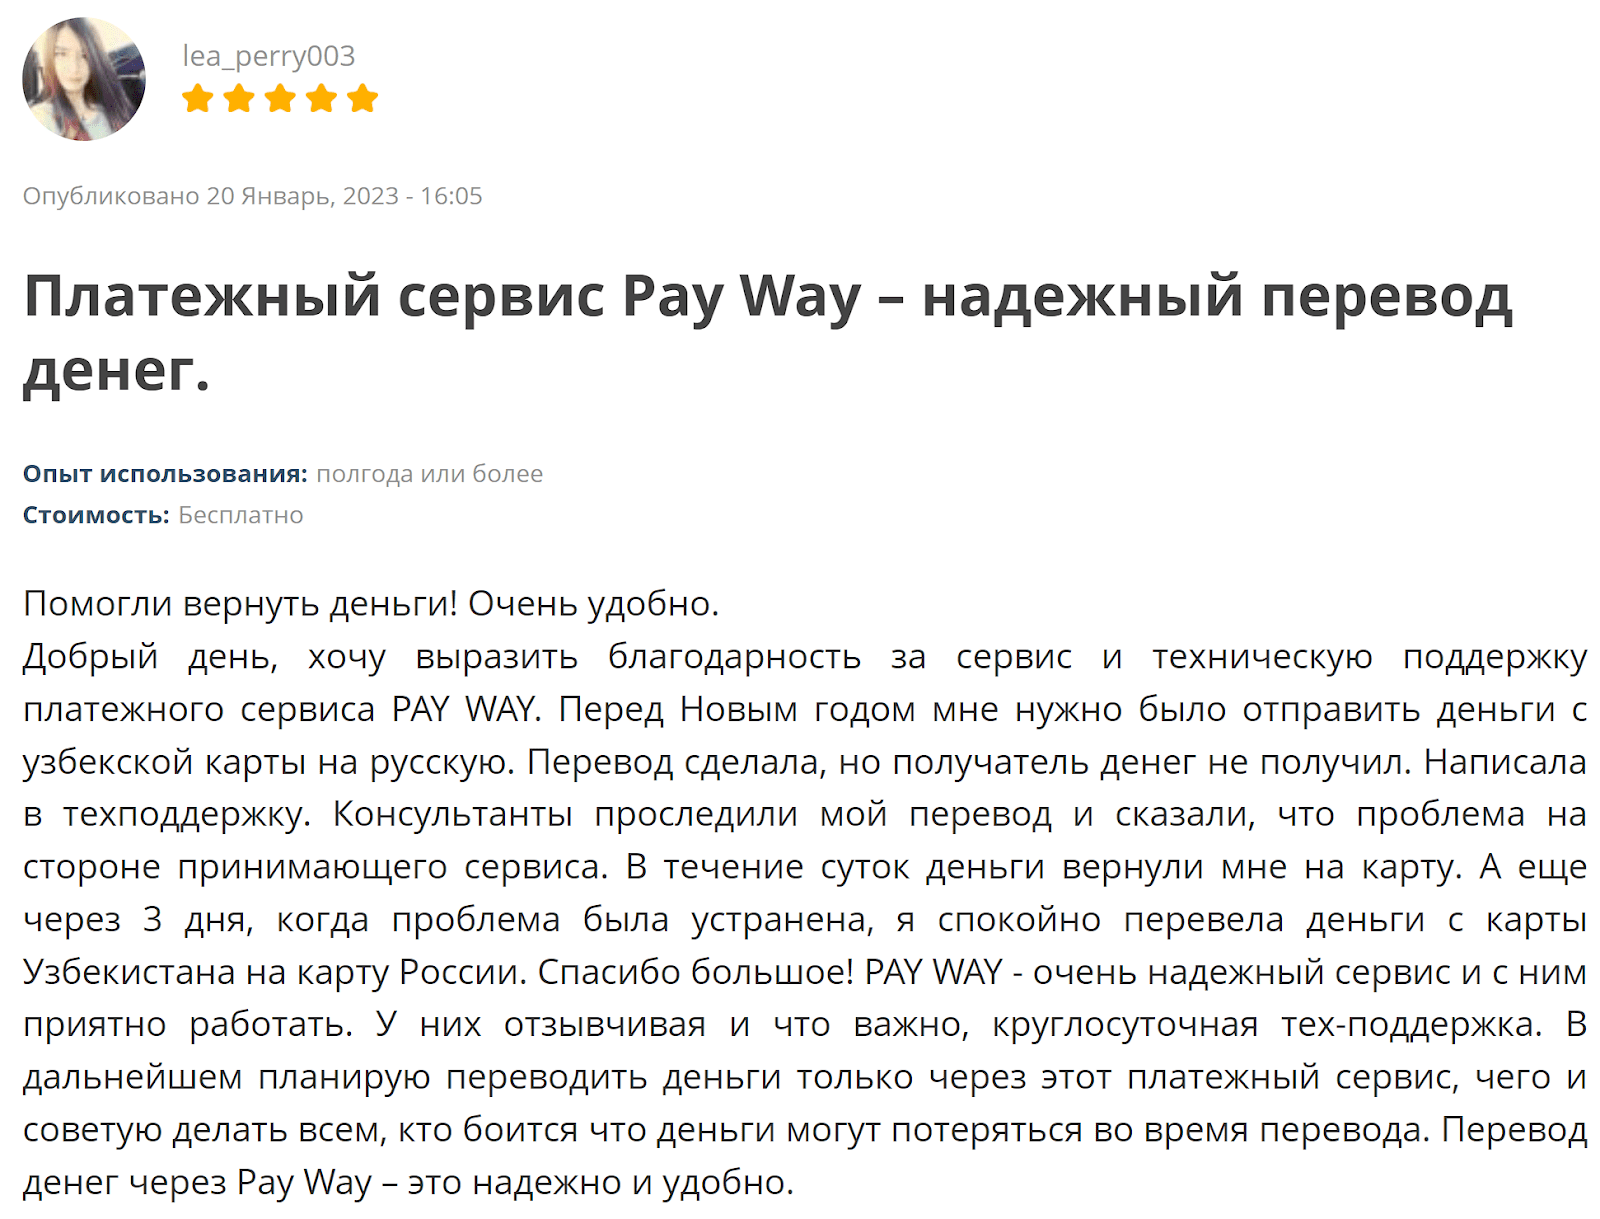 pay way платежный сервис